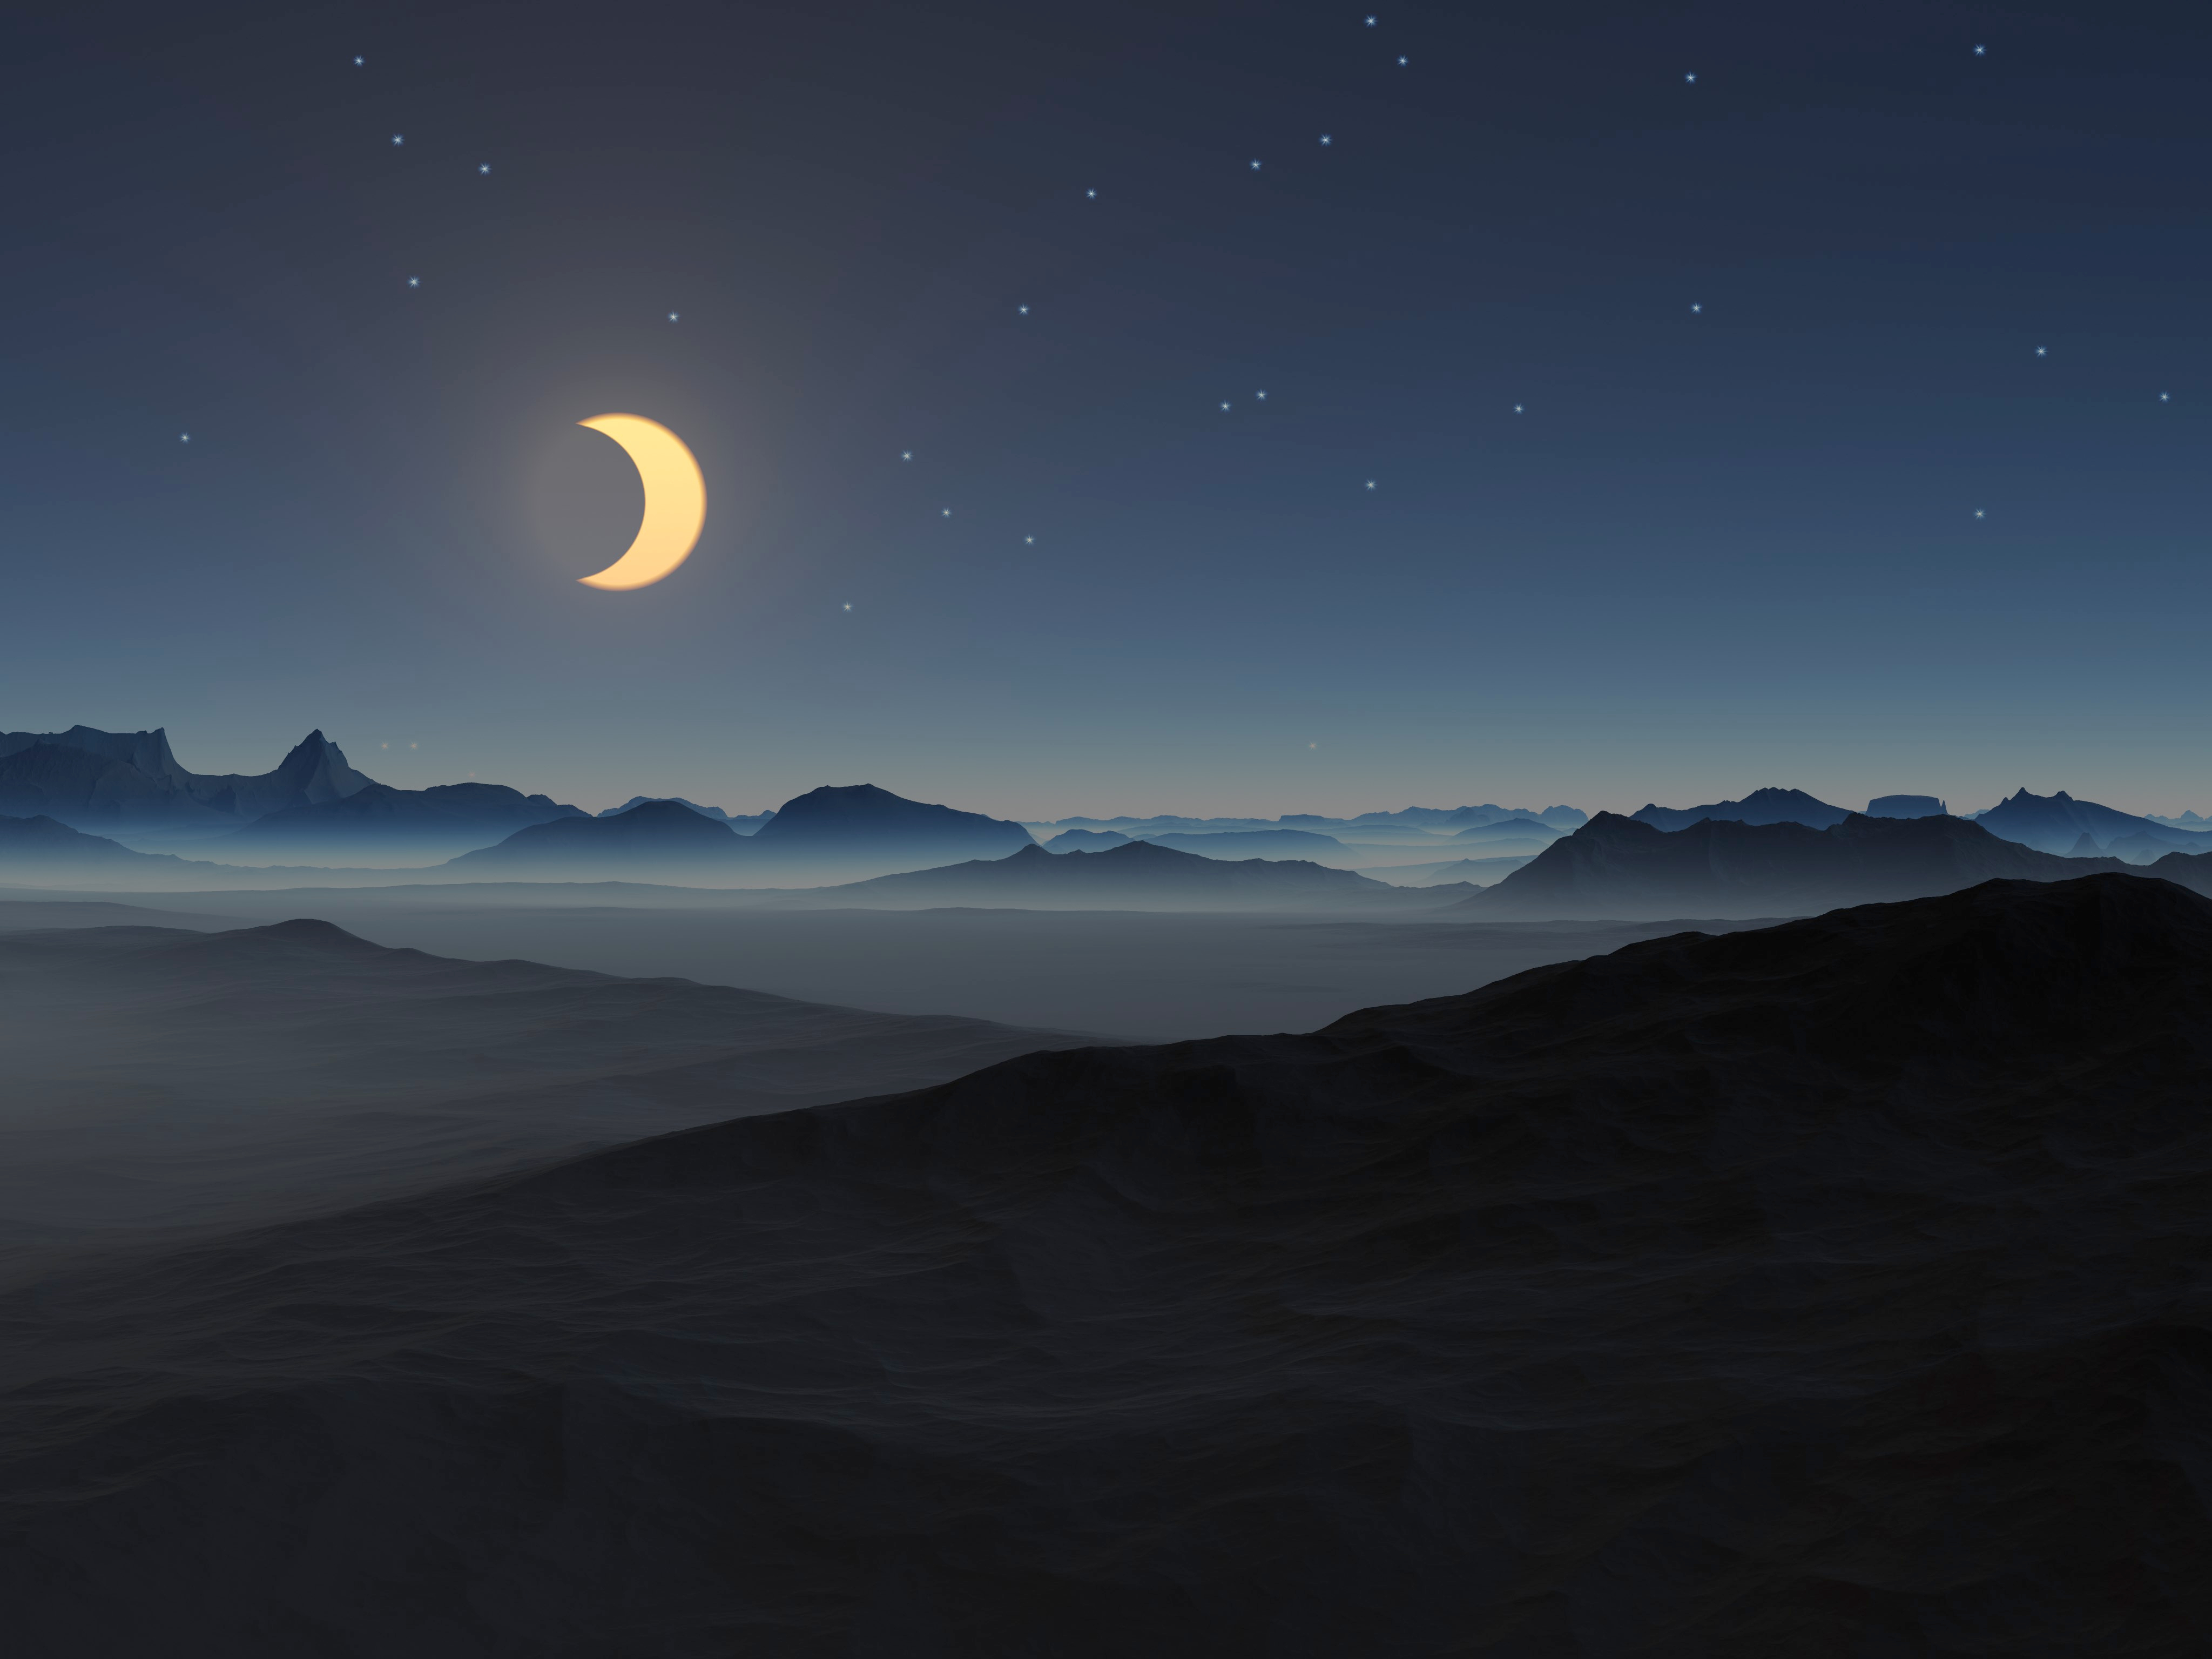 General 4096x3072 CGI mountains mist stars sky night dark crescent moon nature landscape Moon rocks desert